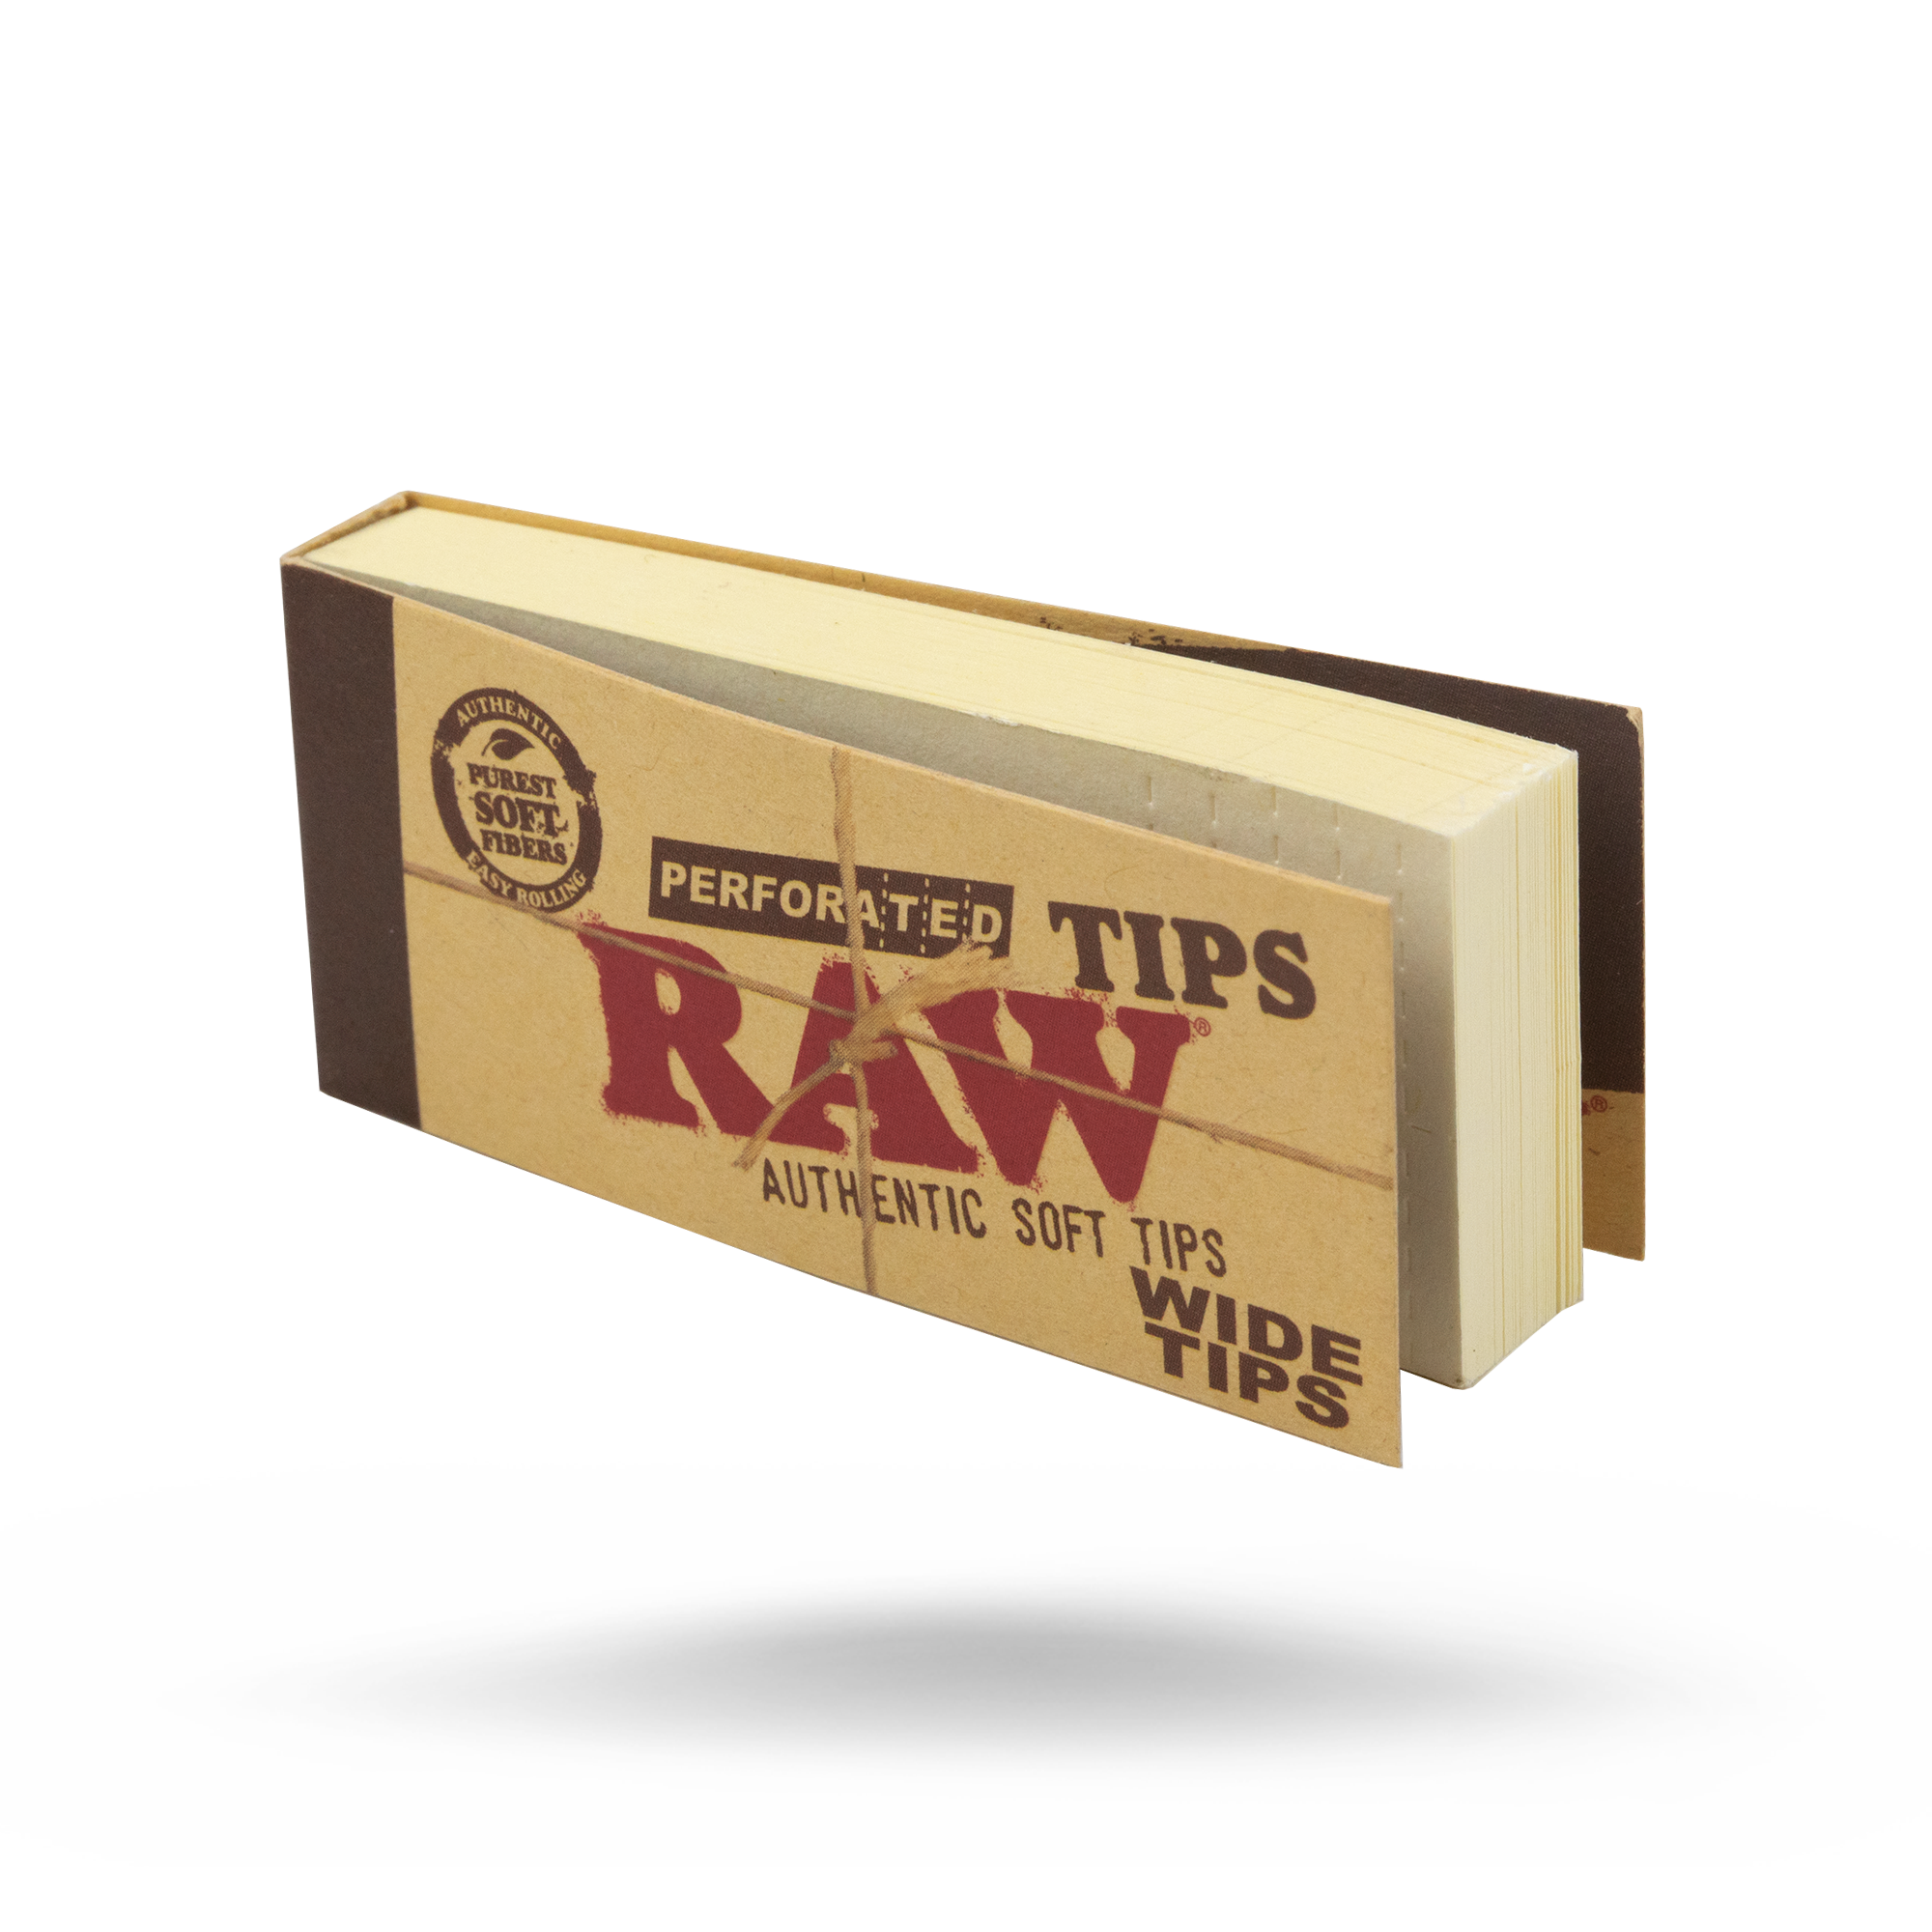  RAW Tips Original Roll Up Tips Full Box, 50 Packs, 50 RAW Tips  per Pack